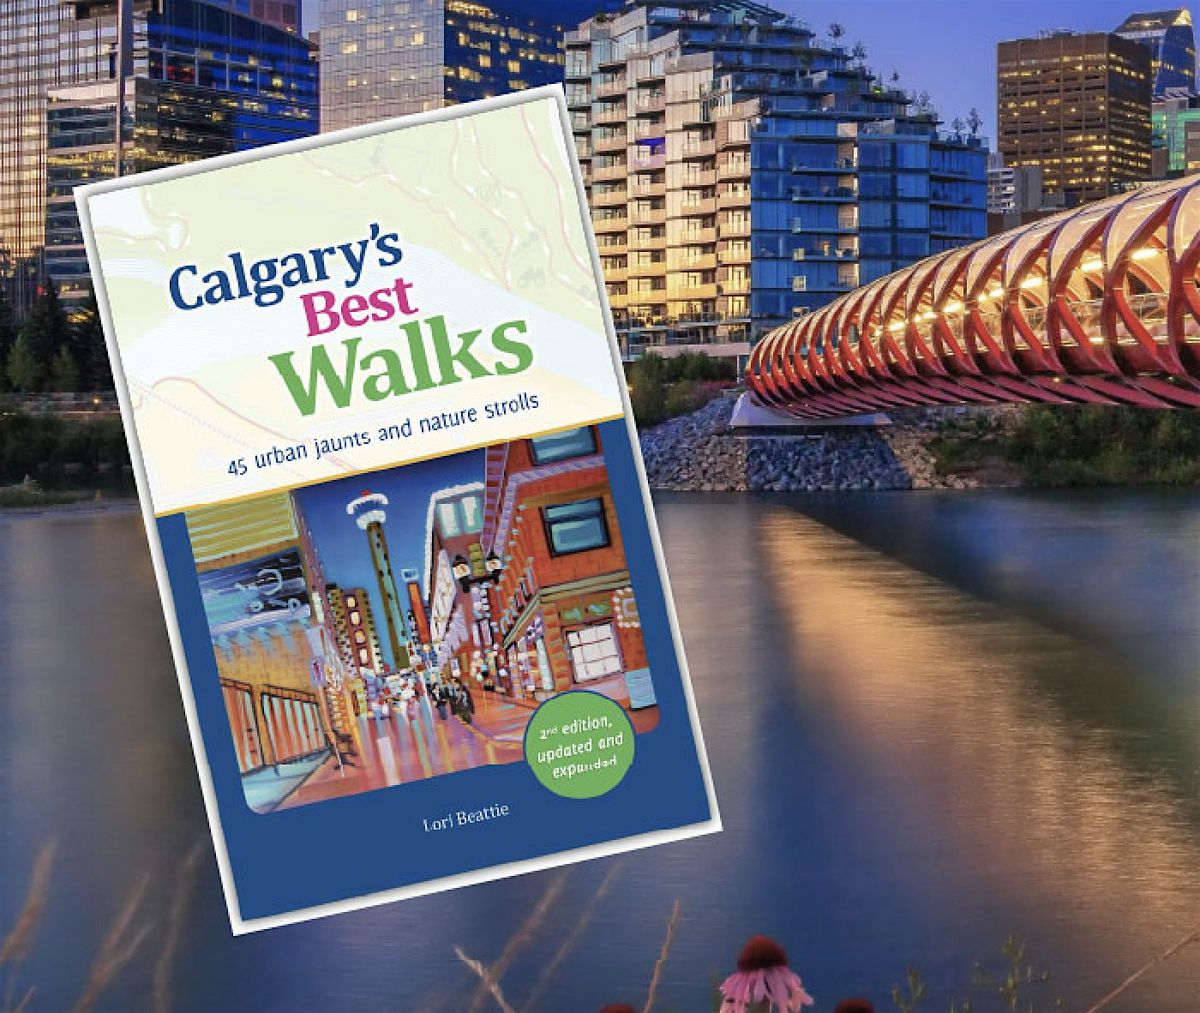 FREE Calgary Library Walk with Calgary's Best Walks author Lori Beattie